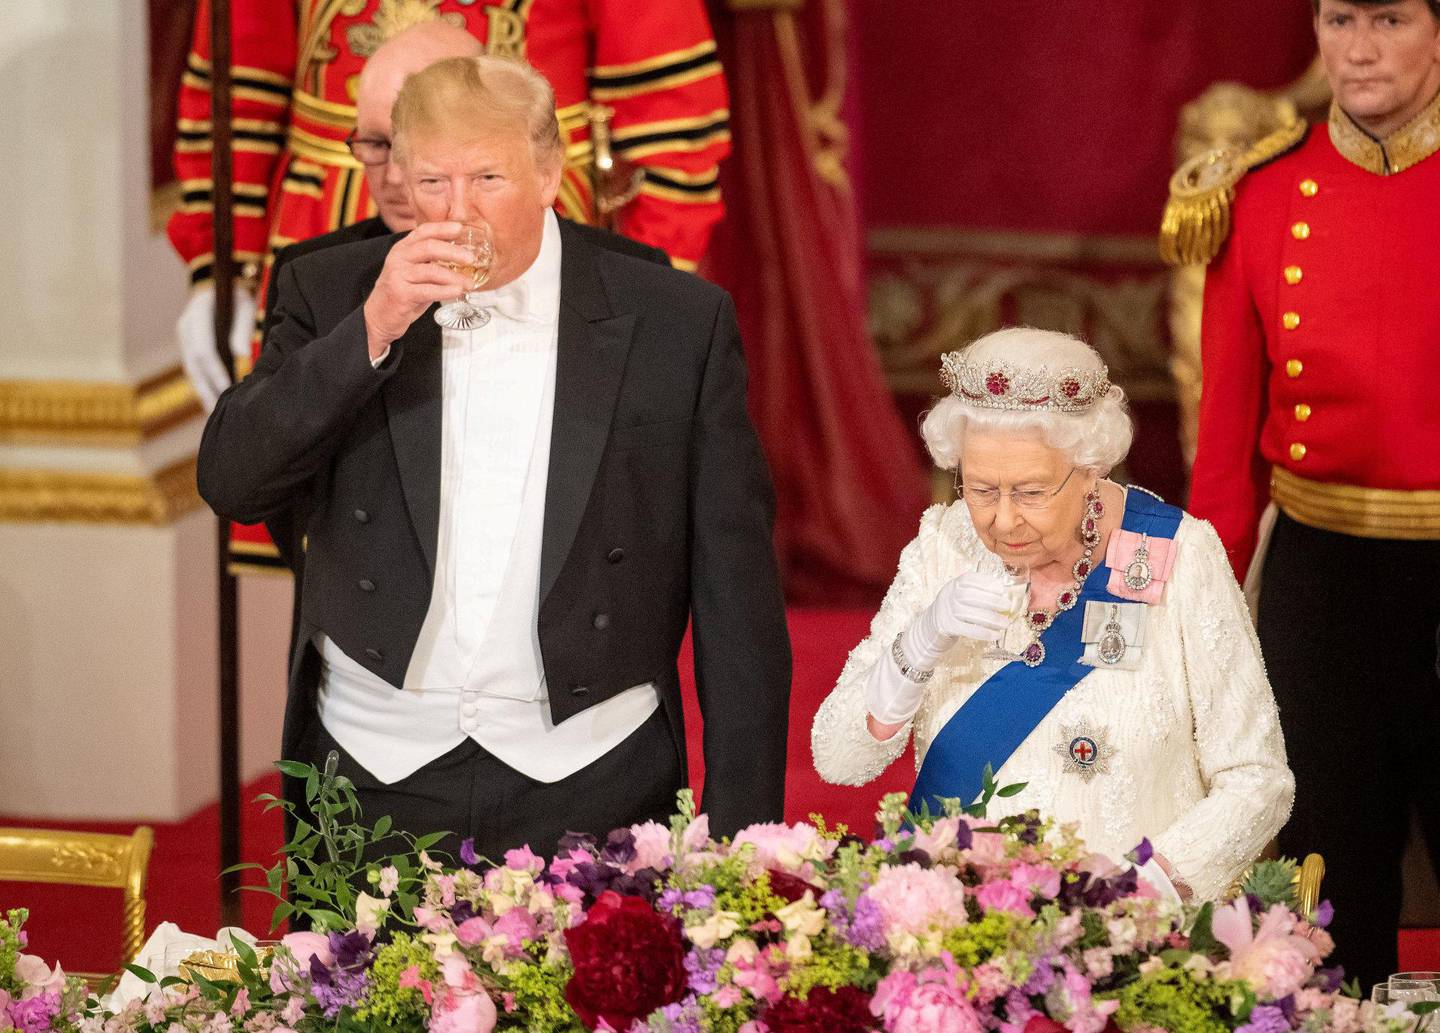 BANKETT: Trump på banketten i Buckingham Palace med dronning Elizabeth mandag. FOTO: NTB SCANPIX